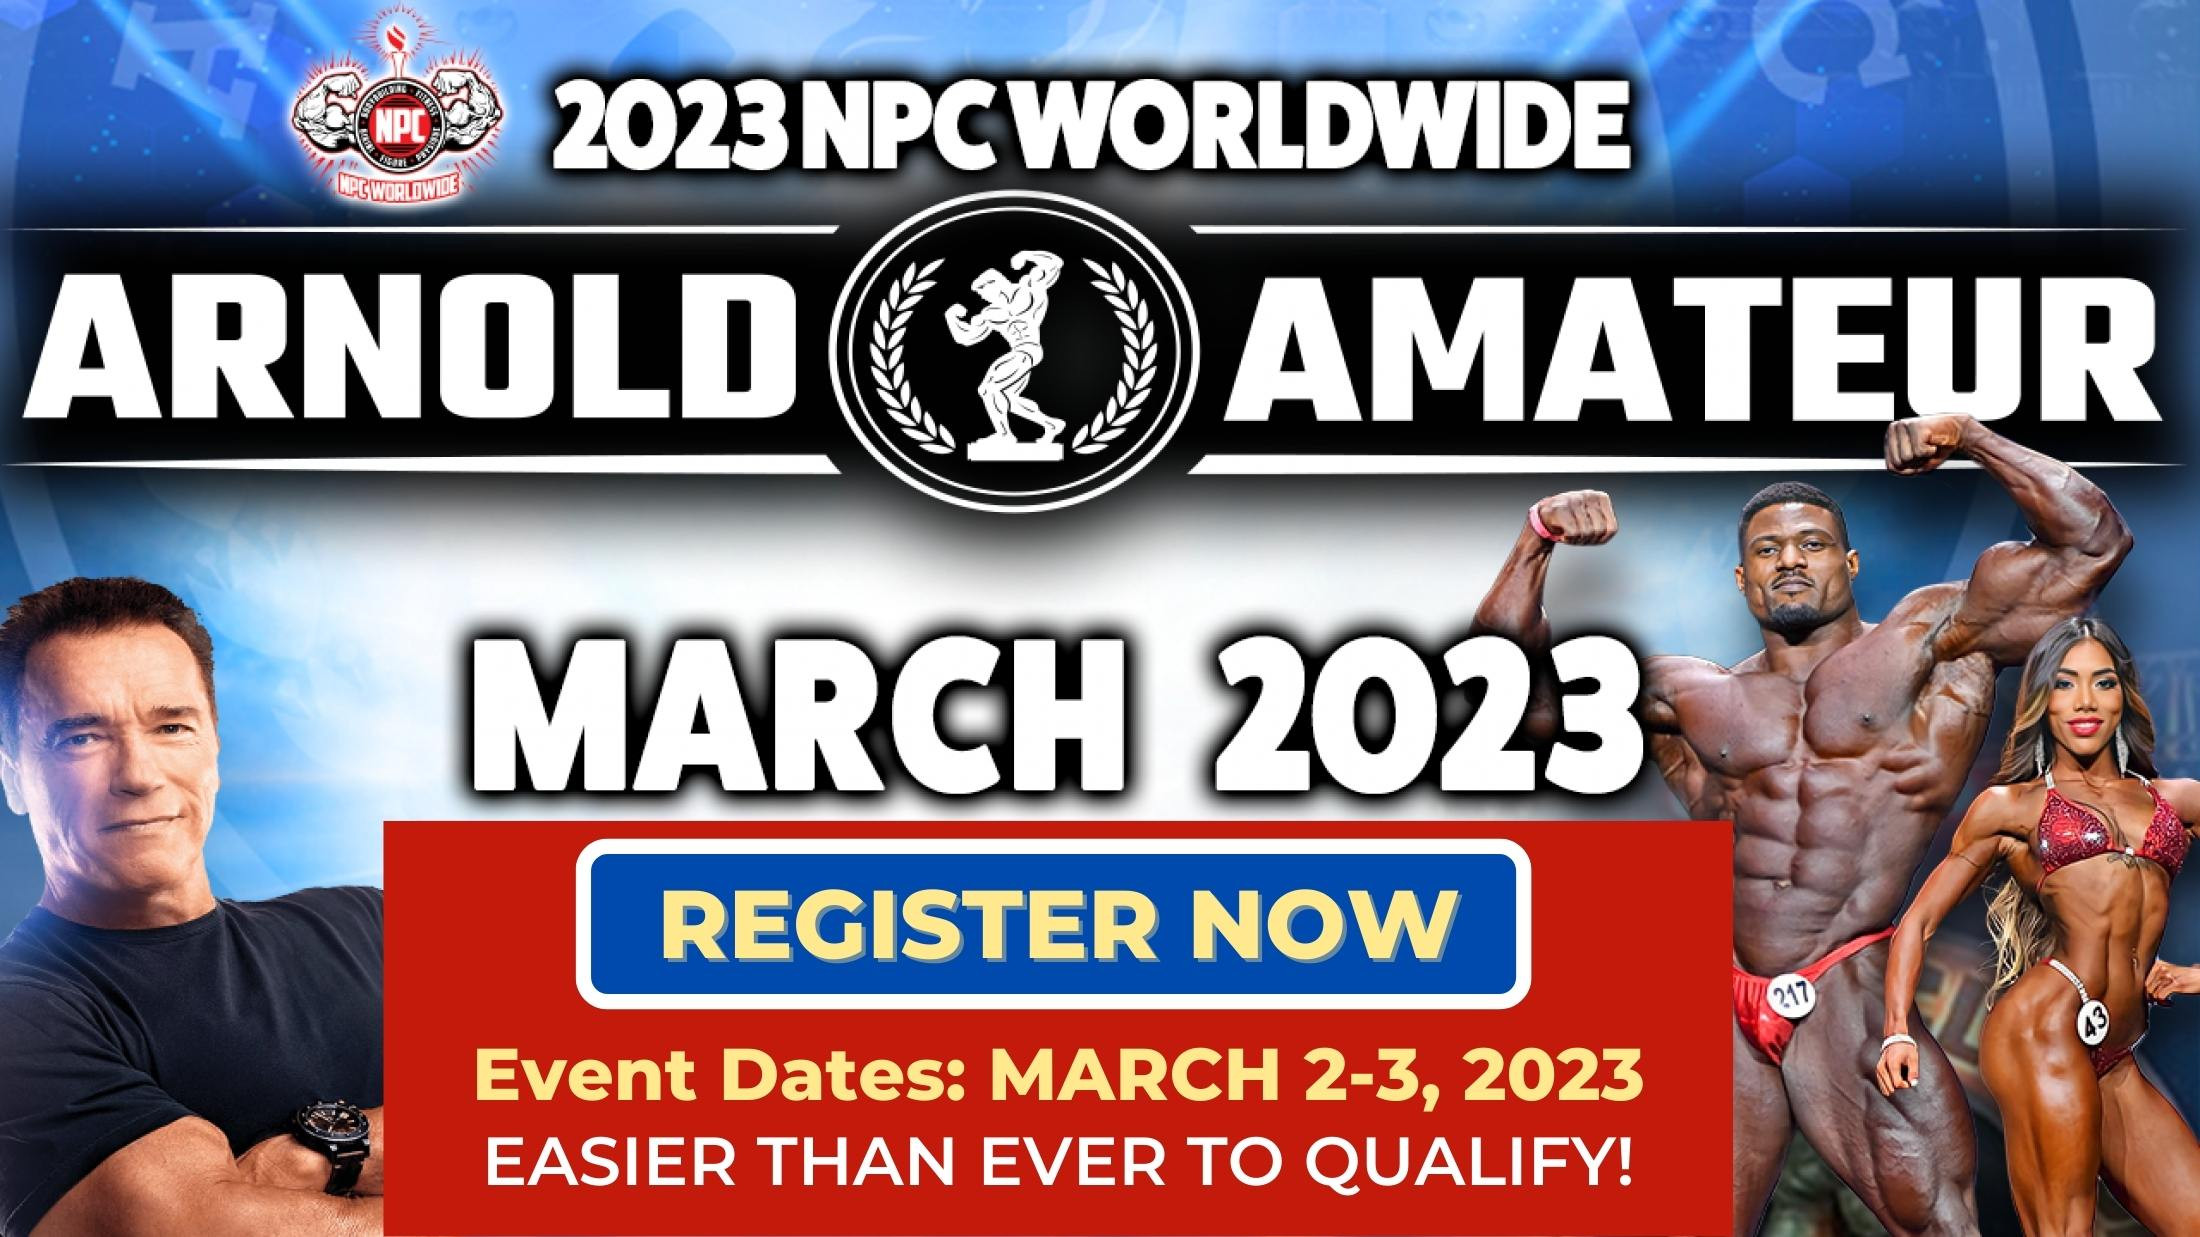 2023 NPC Worldwide Arnold Amateur - March 2023 - Registration opens Sept 1